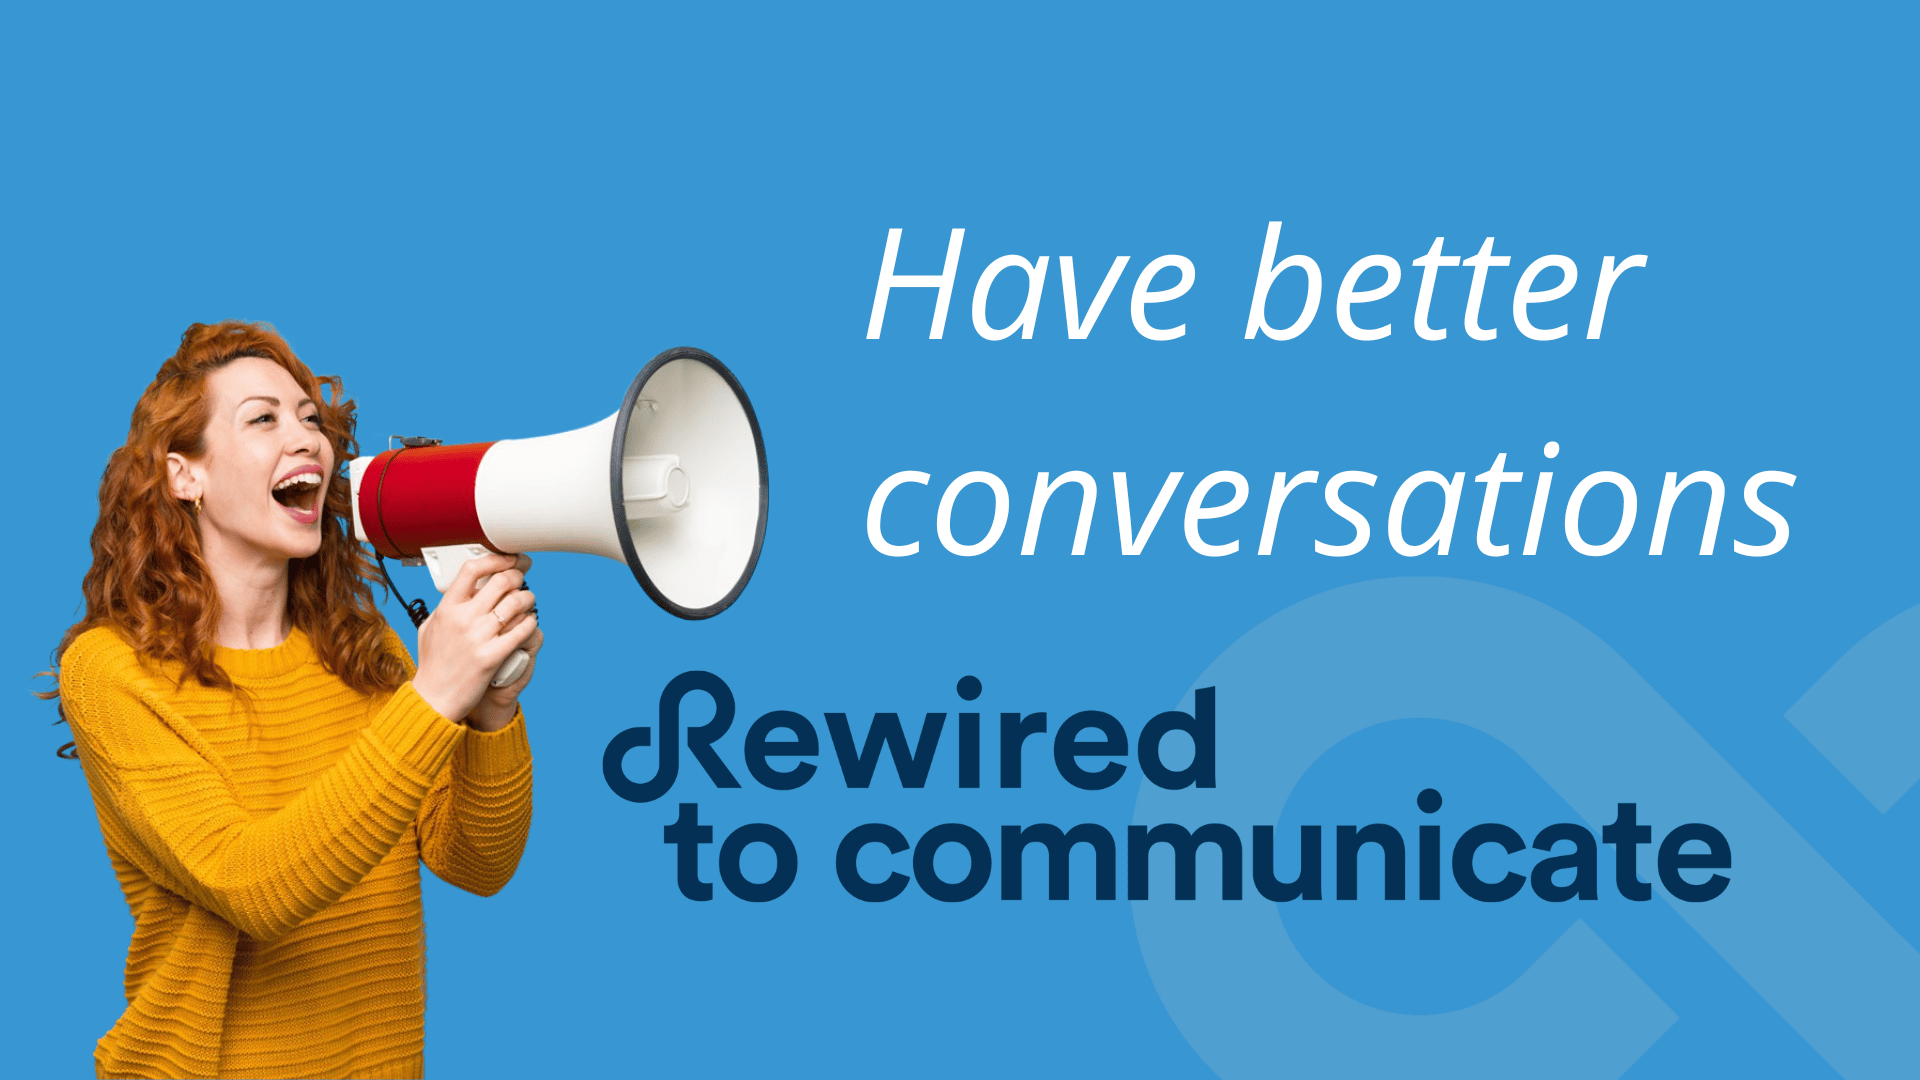 Have better conversations